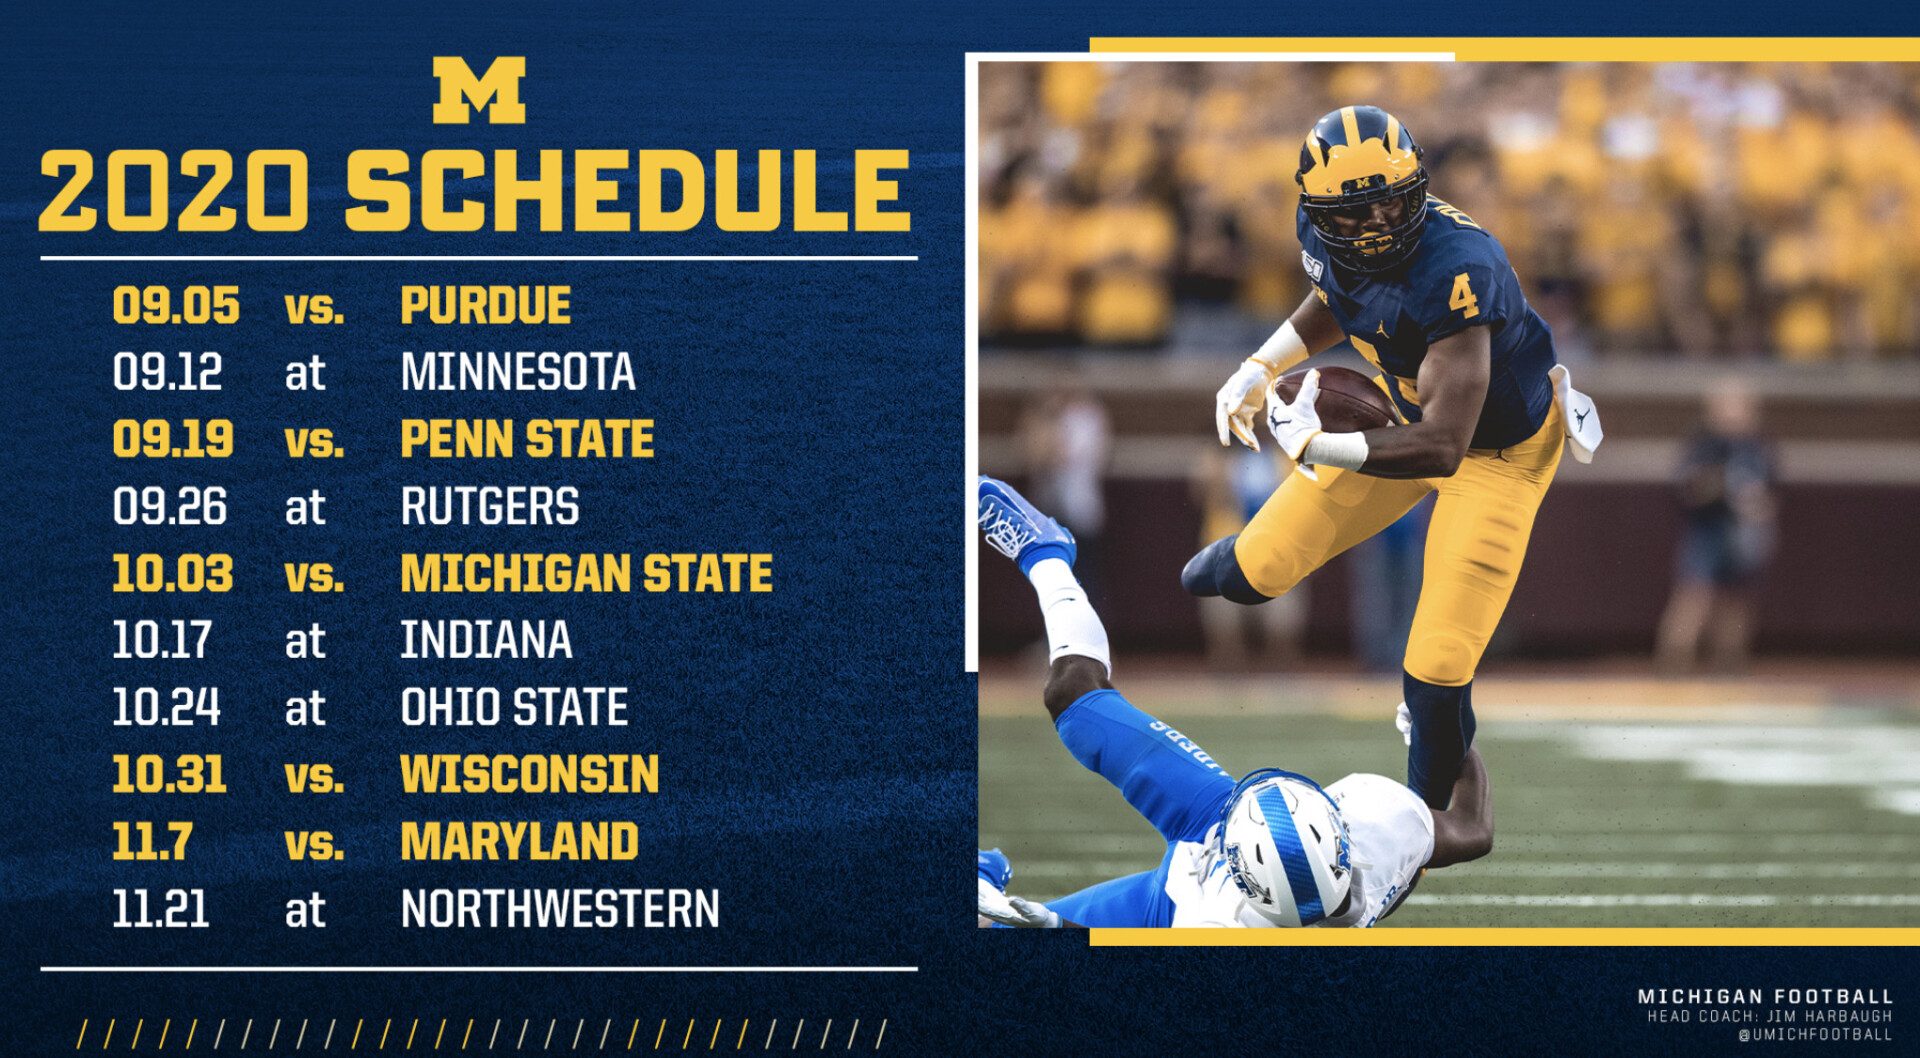 U of M Michigan's 2020 football schedule includes October game vs